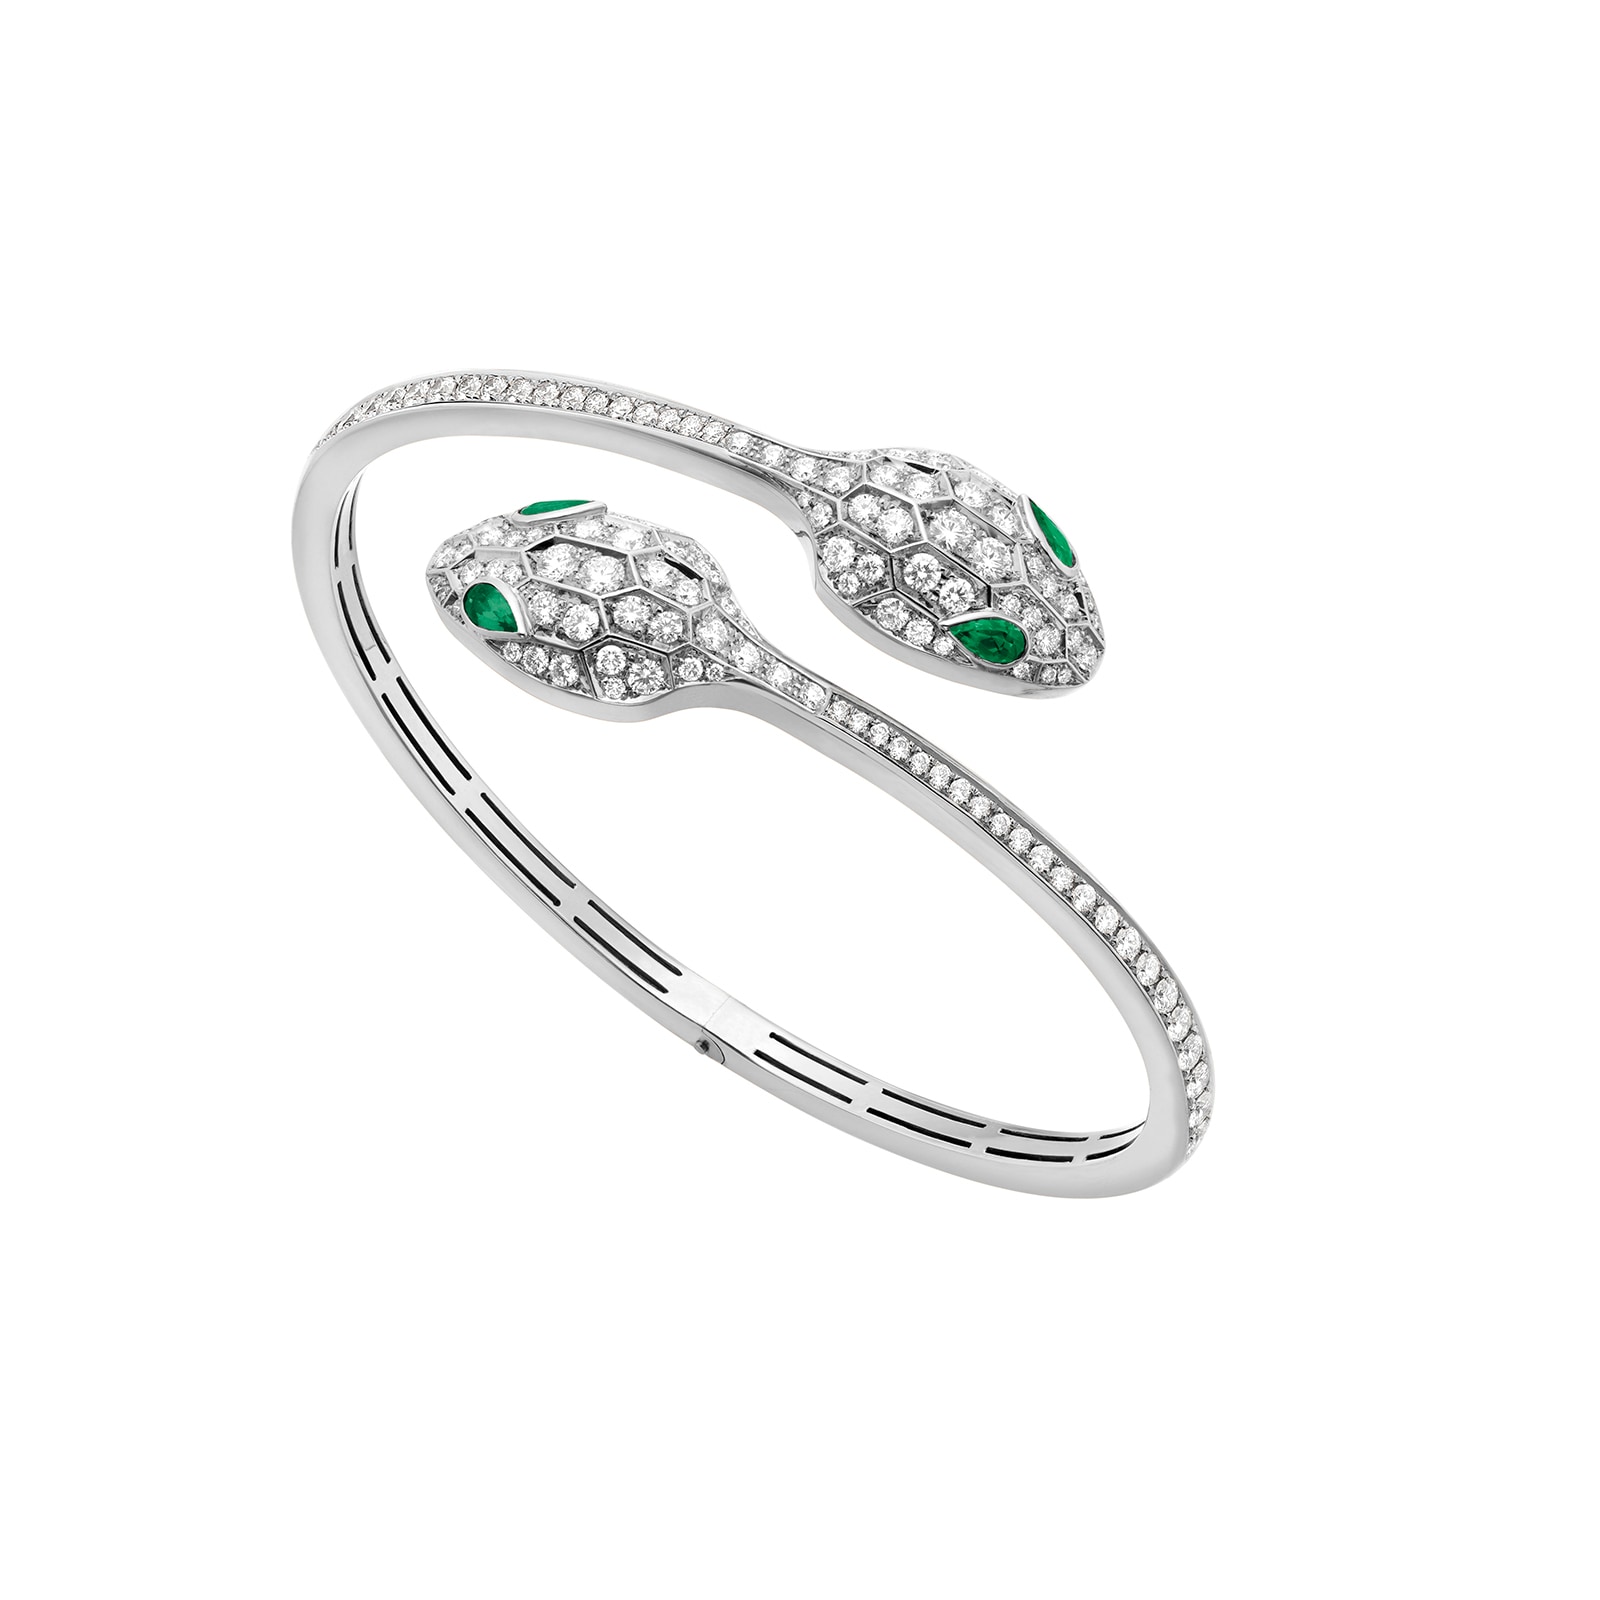 18k White Gold 1.72cttw Diamond And Emerald Serpenti Bracelet Size Medium